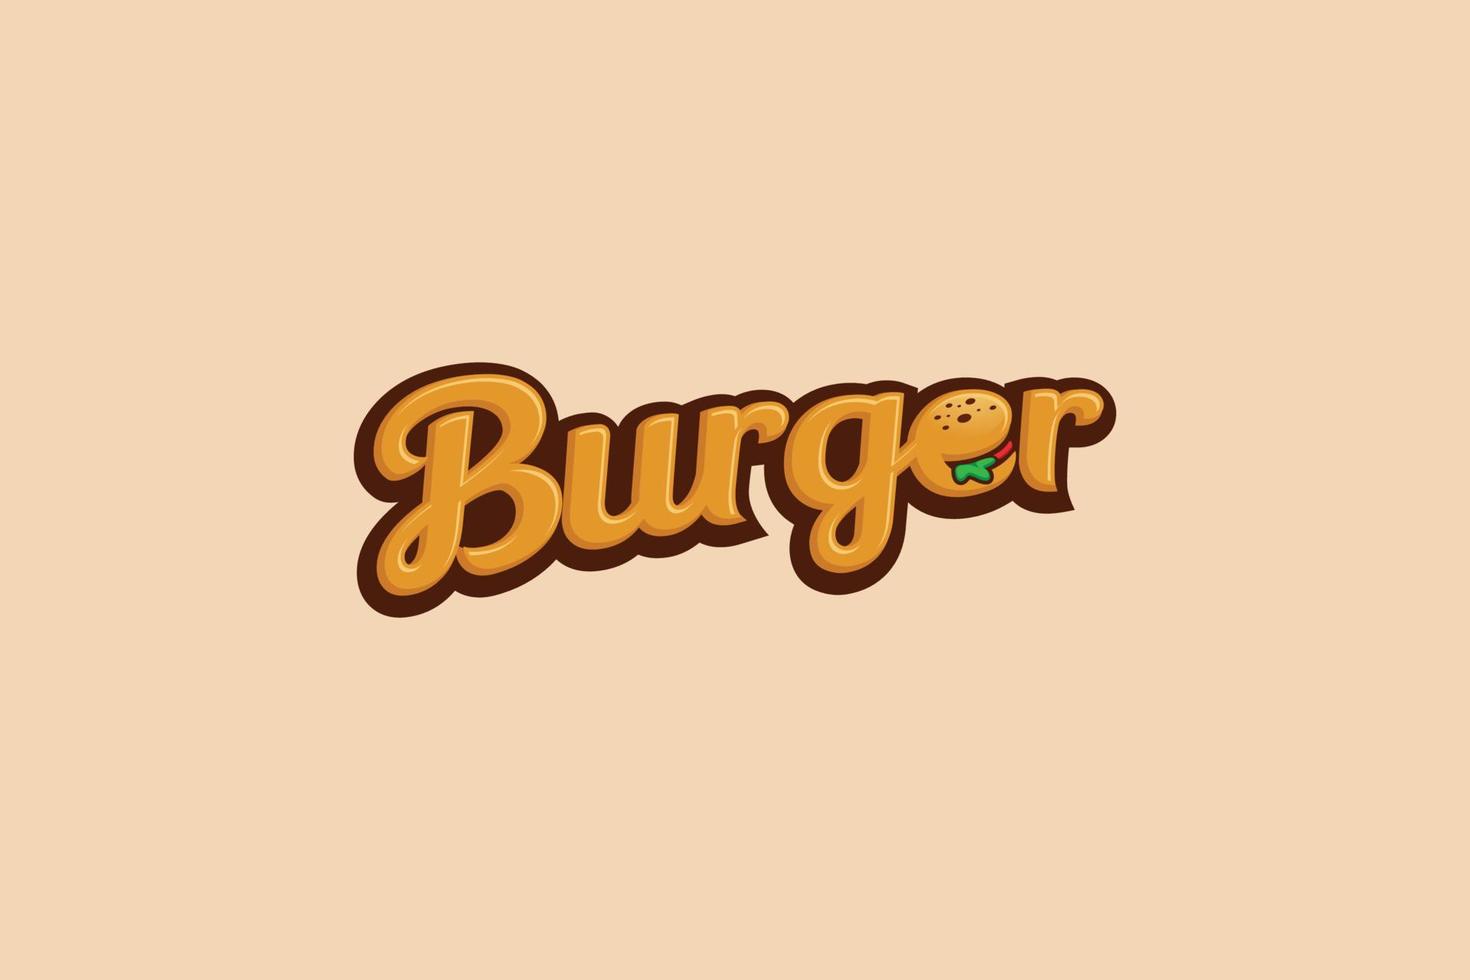 logotipo de hamburguesa simple con letra e modificada como hamburguesa. vector